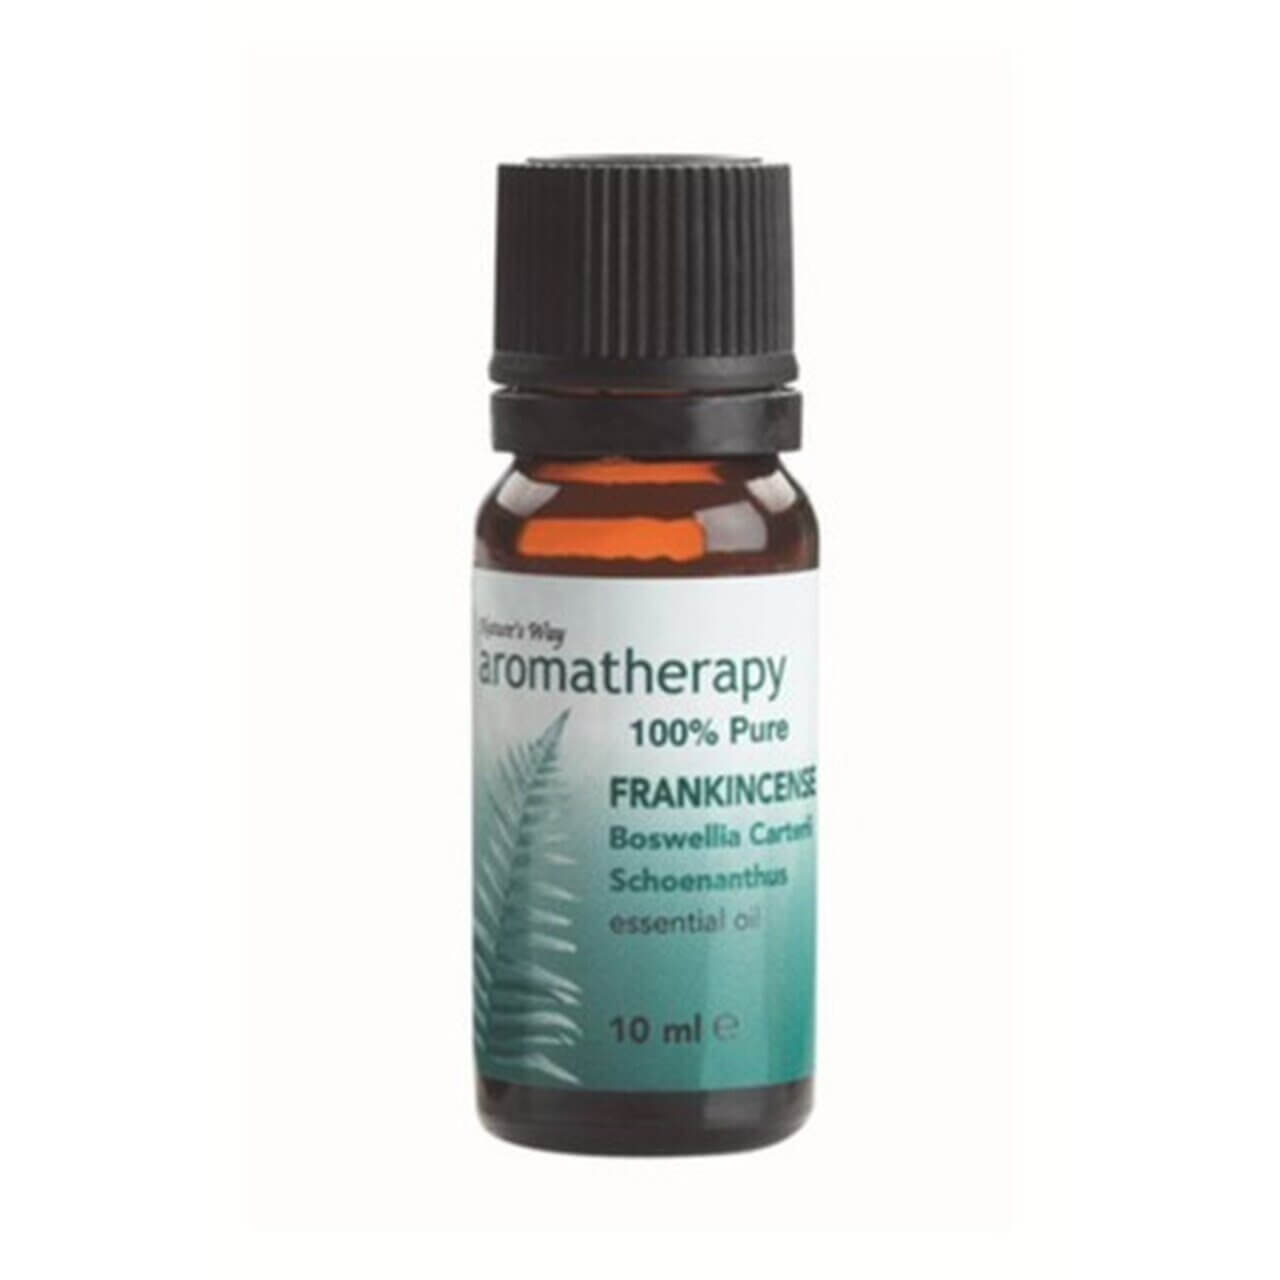 Aromatherapy Oil Natures Way Frankincense 10ml